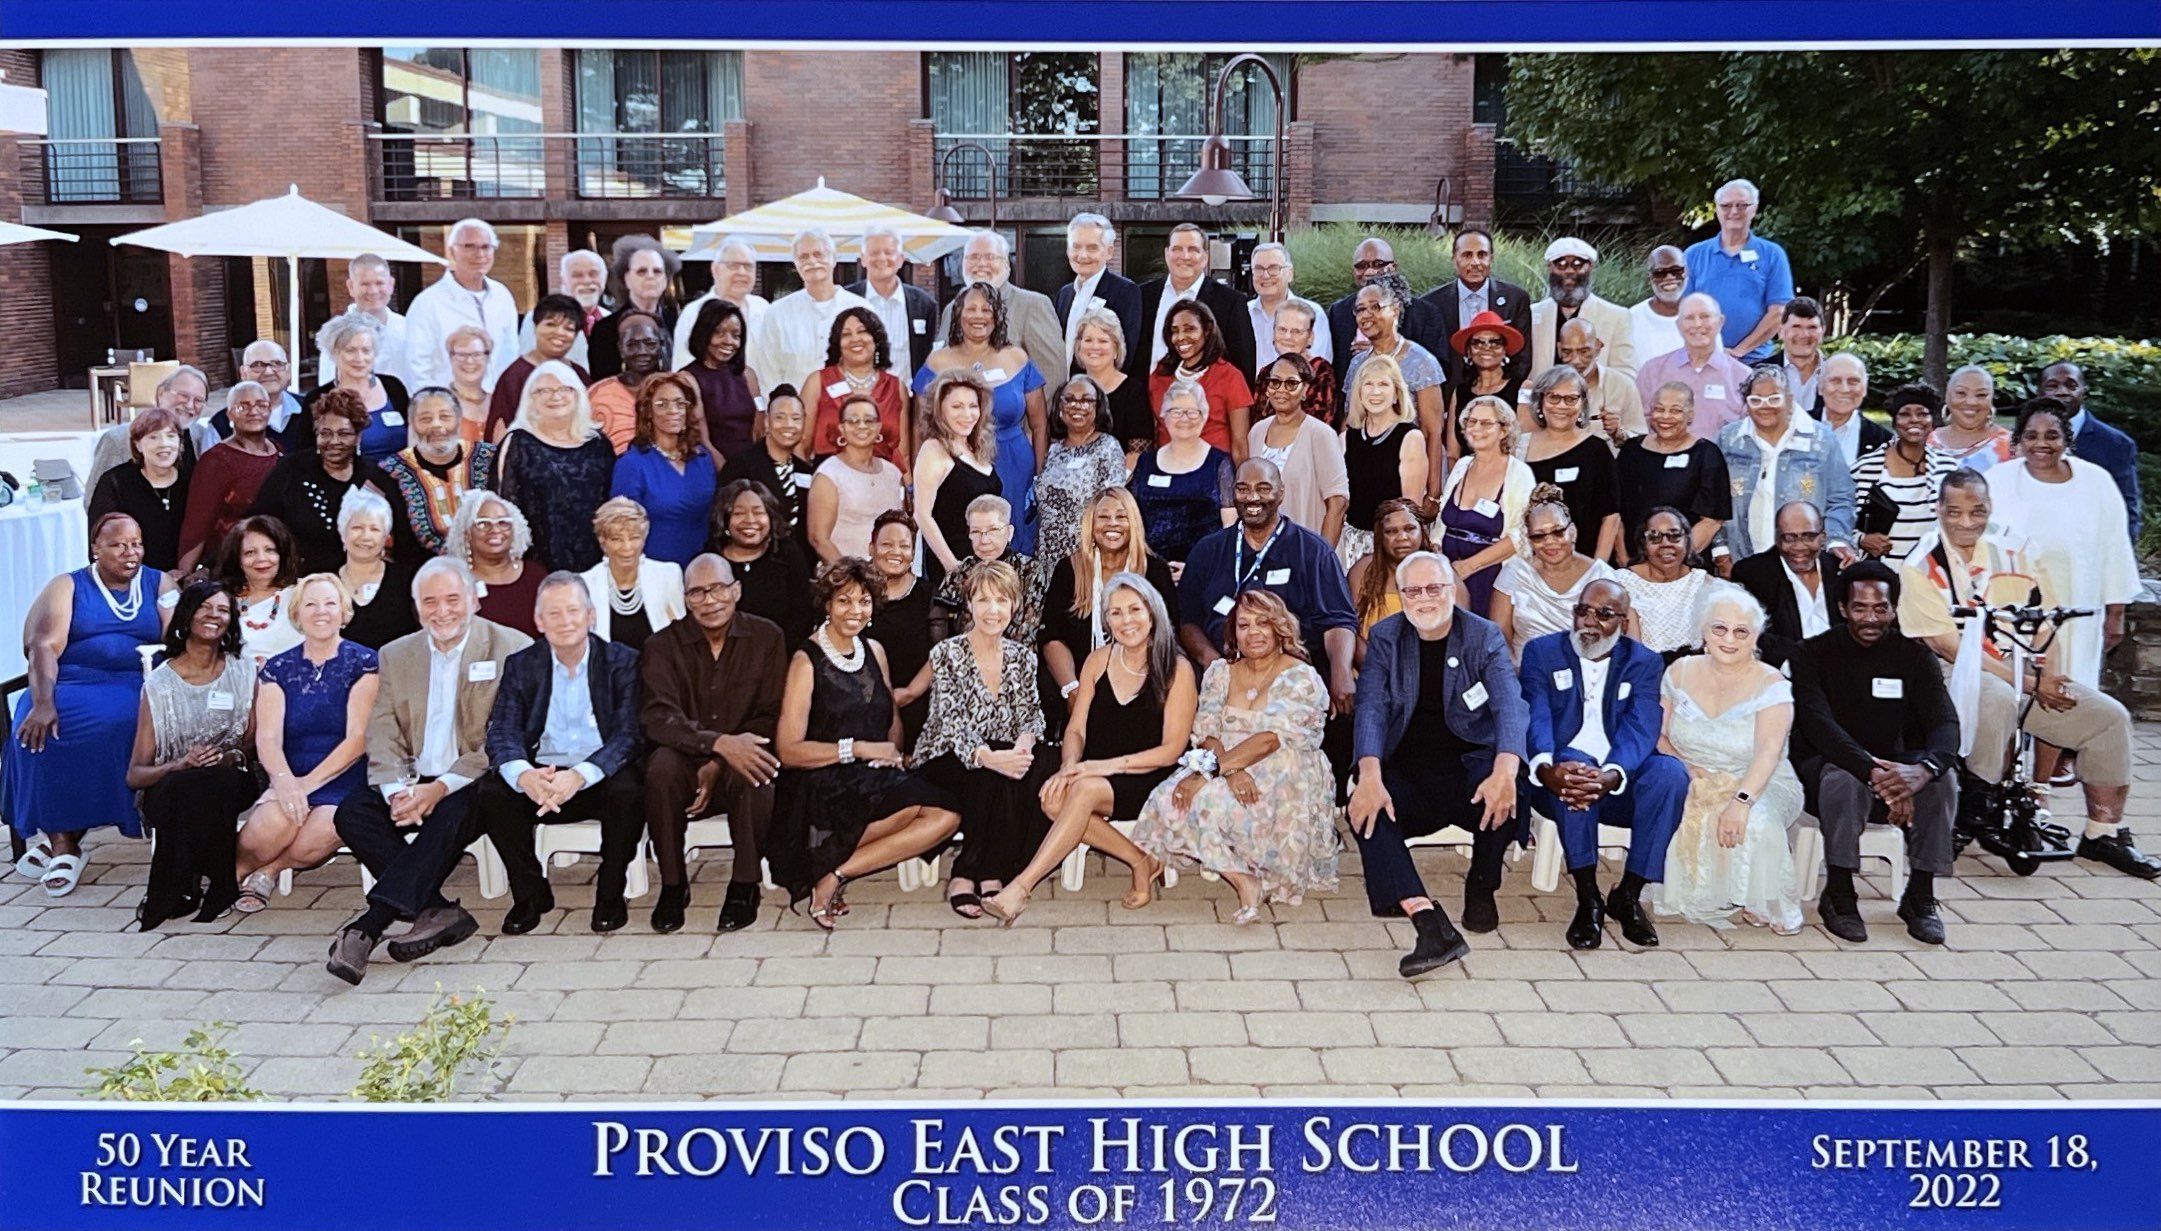 Proviso East Class of 1972 50th Reunion Photo